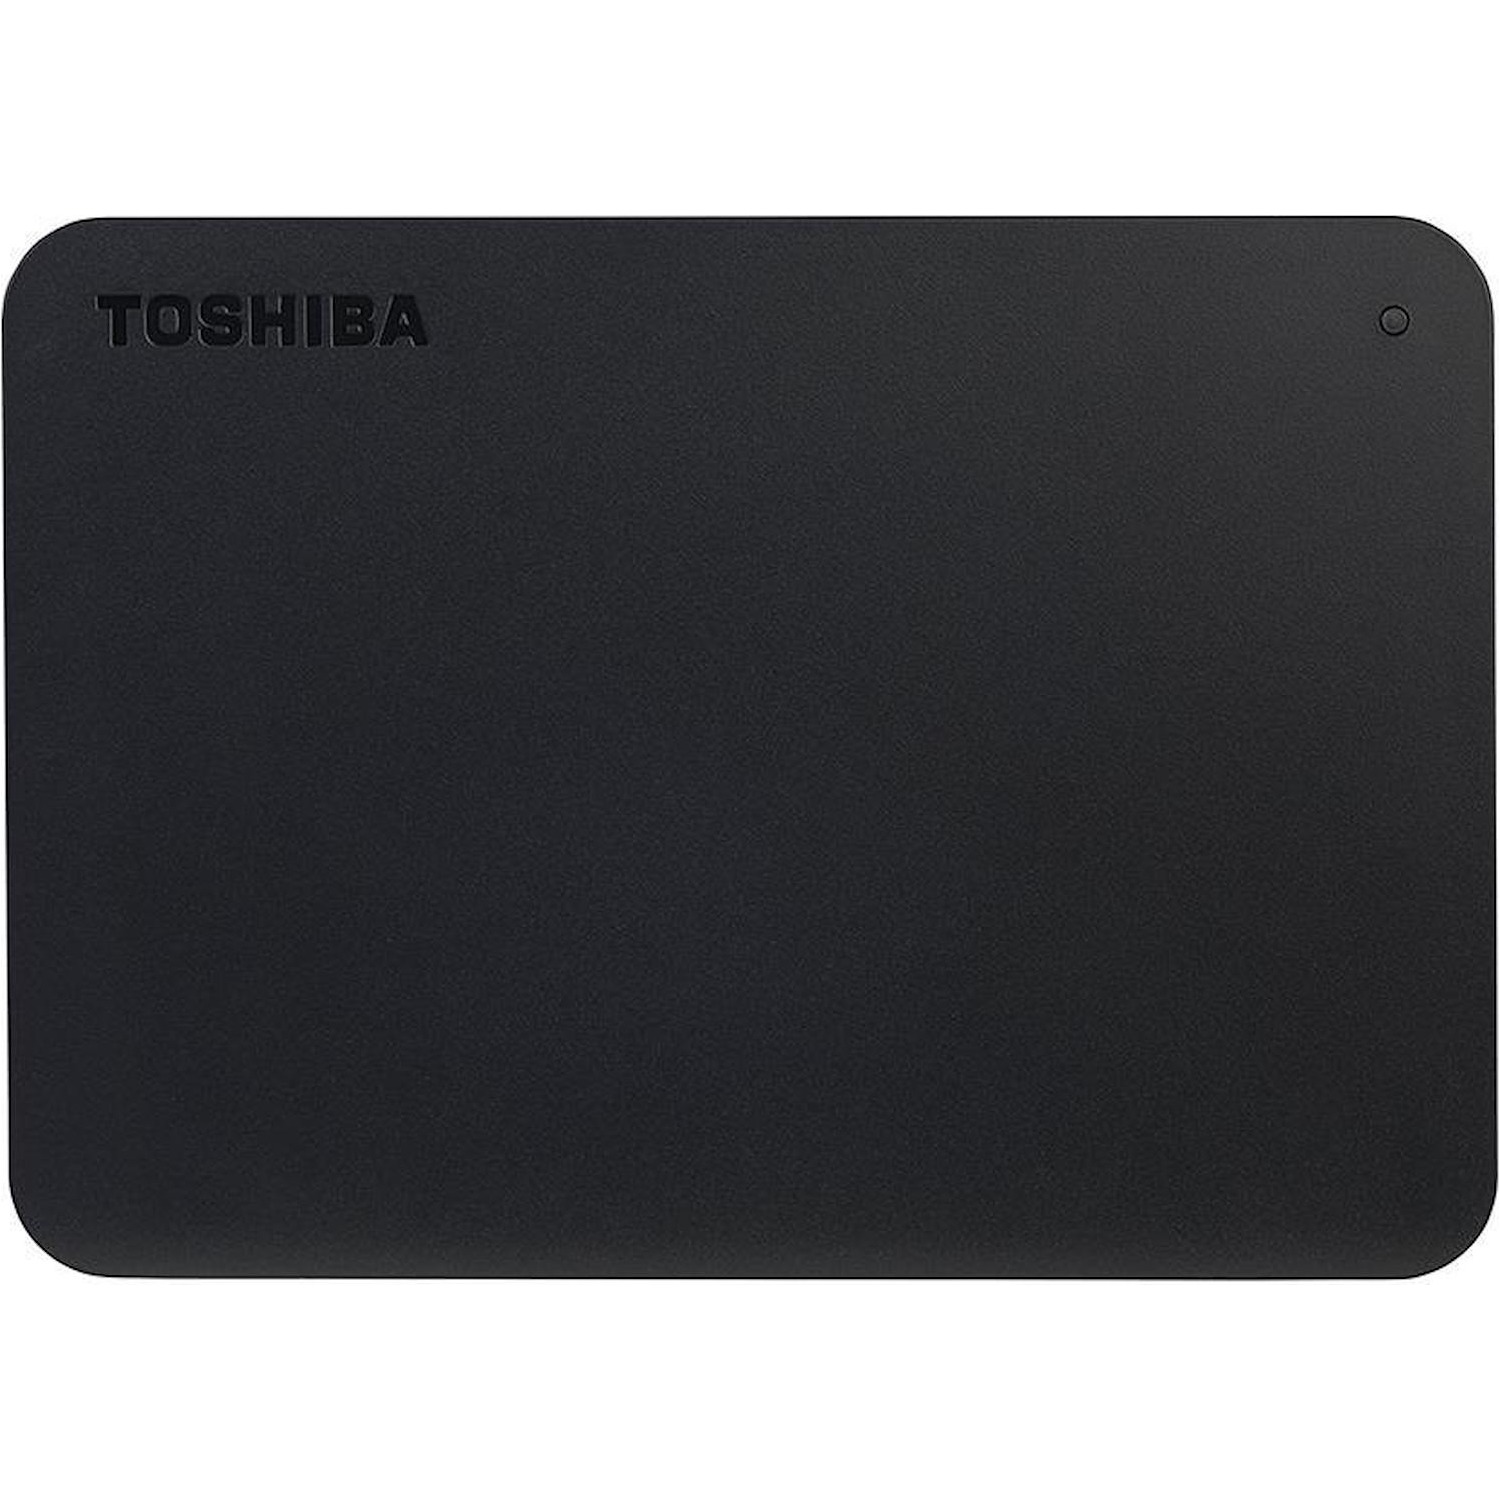 Immagine per HD Toshiba 2TB USB 3.0 nero TB420EK da DIMOStore